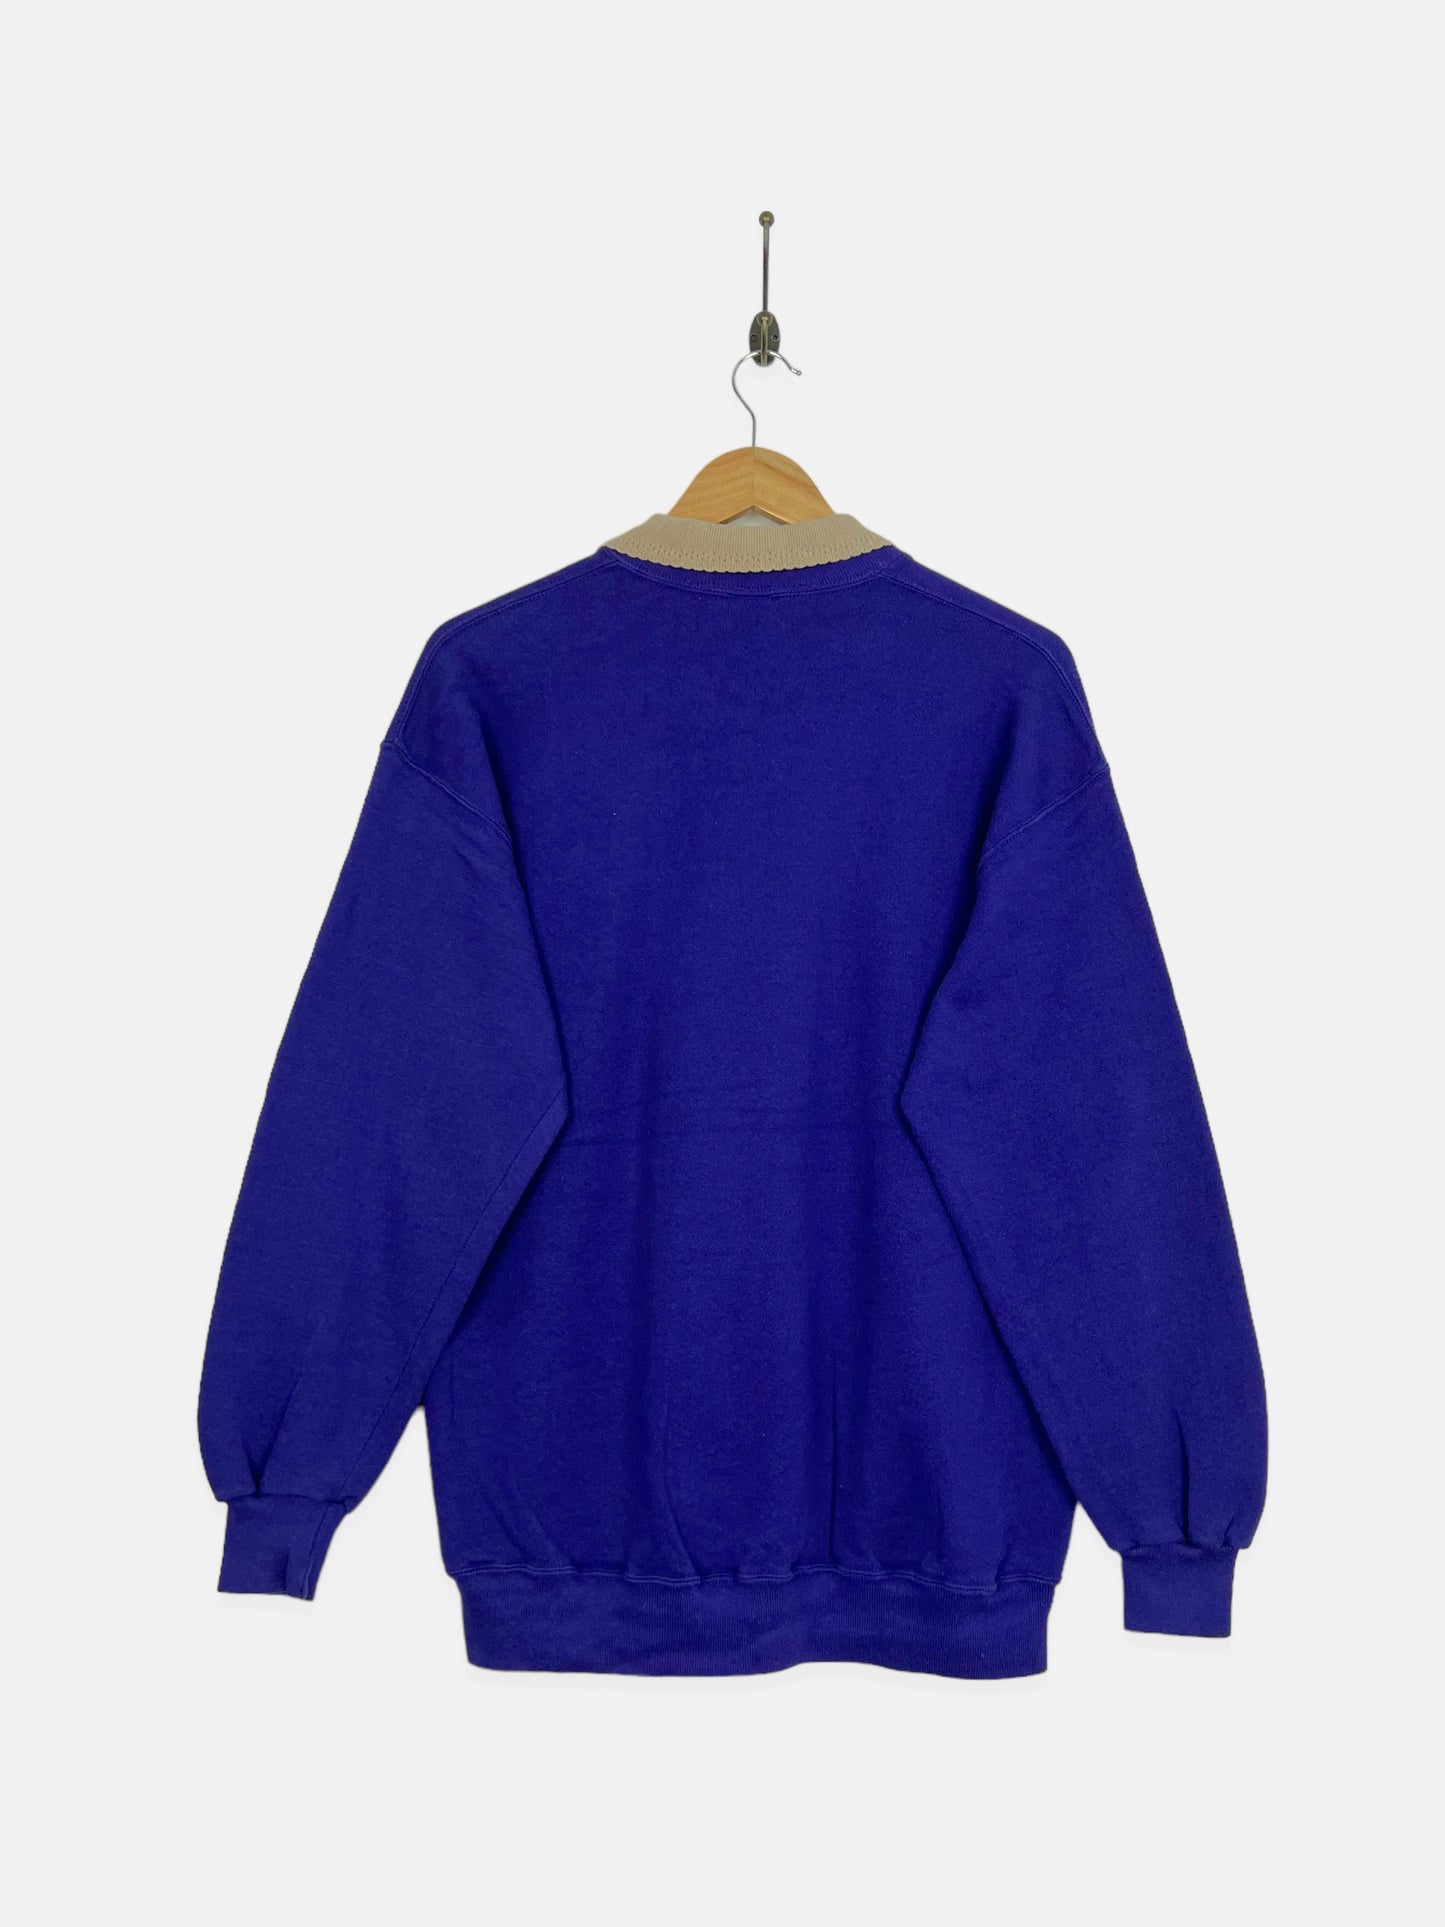 90's Montana USA Made Vintage Collared Sweatshirt Size M-L